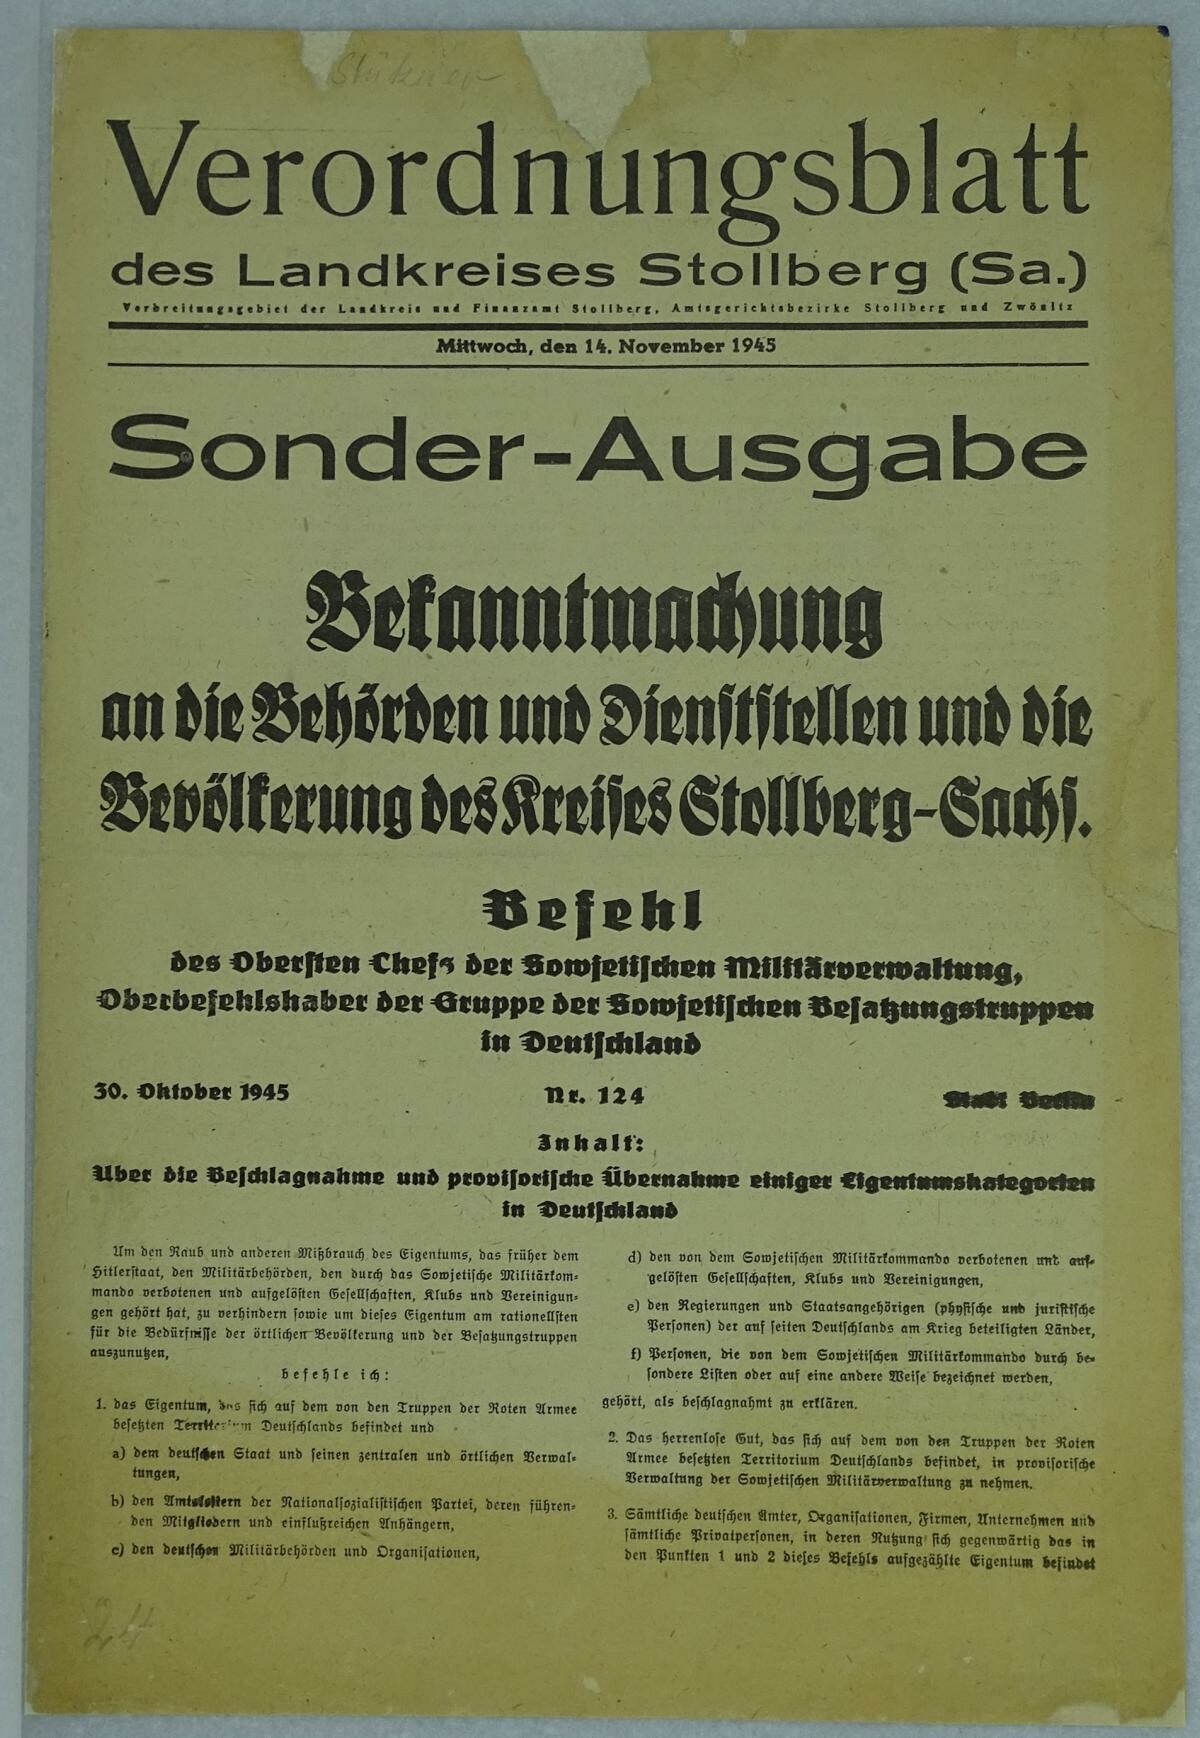 Verordnungsblatt des Landkreises Stollberg (Sa.) vom 14. November 1945 (Bergbaumuseum Oelsnitz/Erzgebirge CC BY-NC-ND)